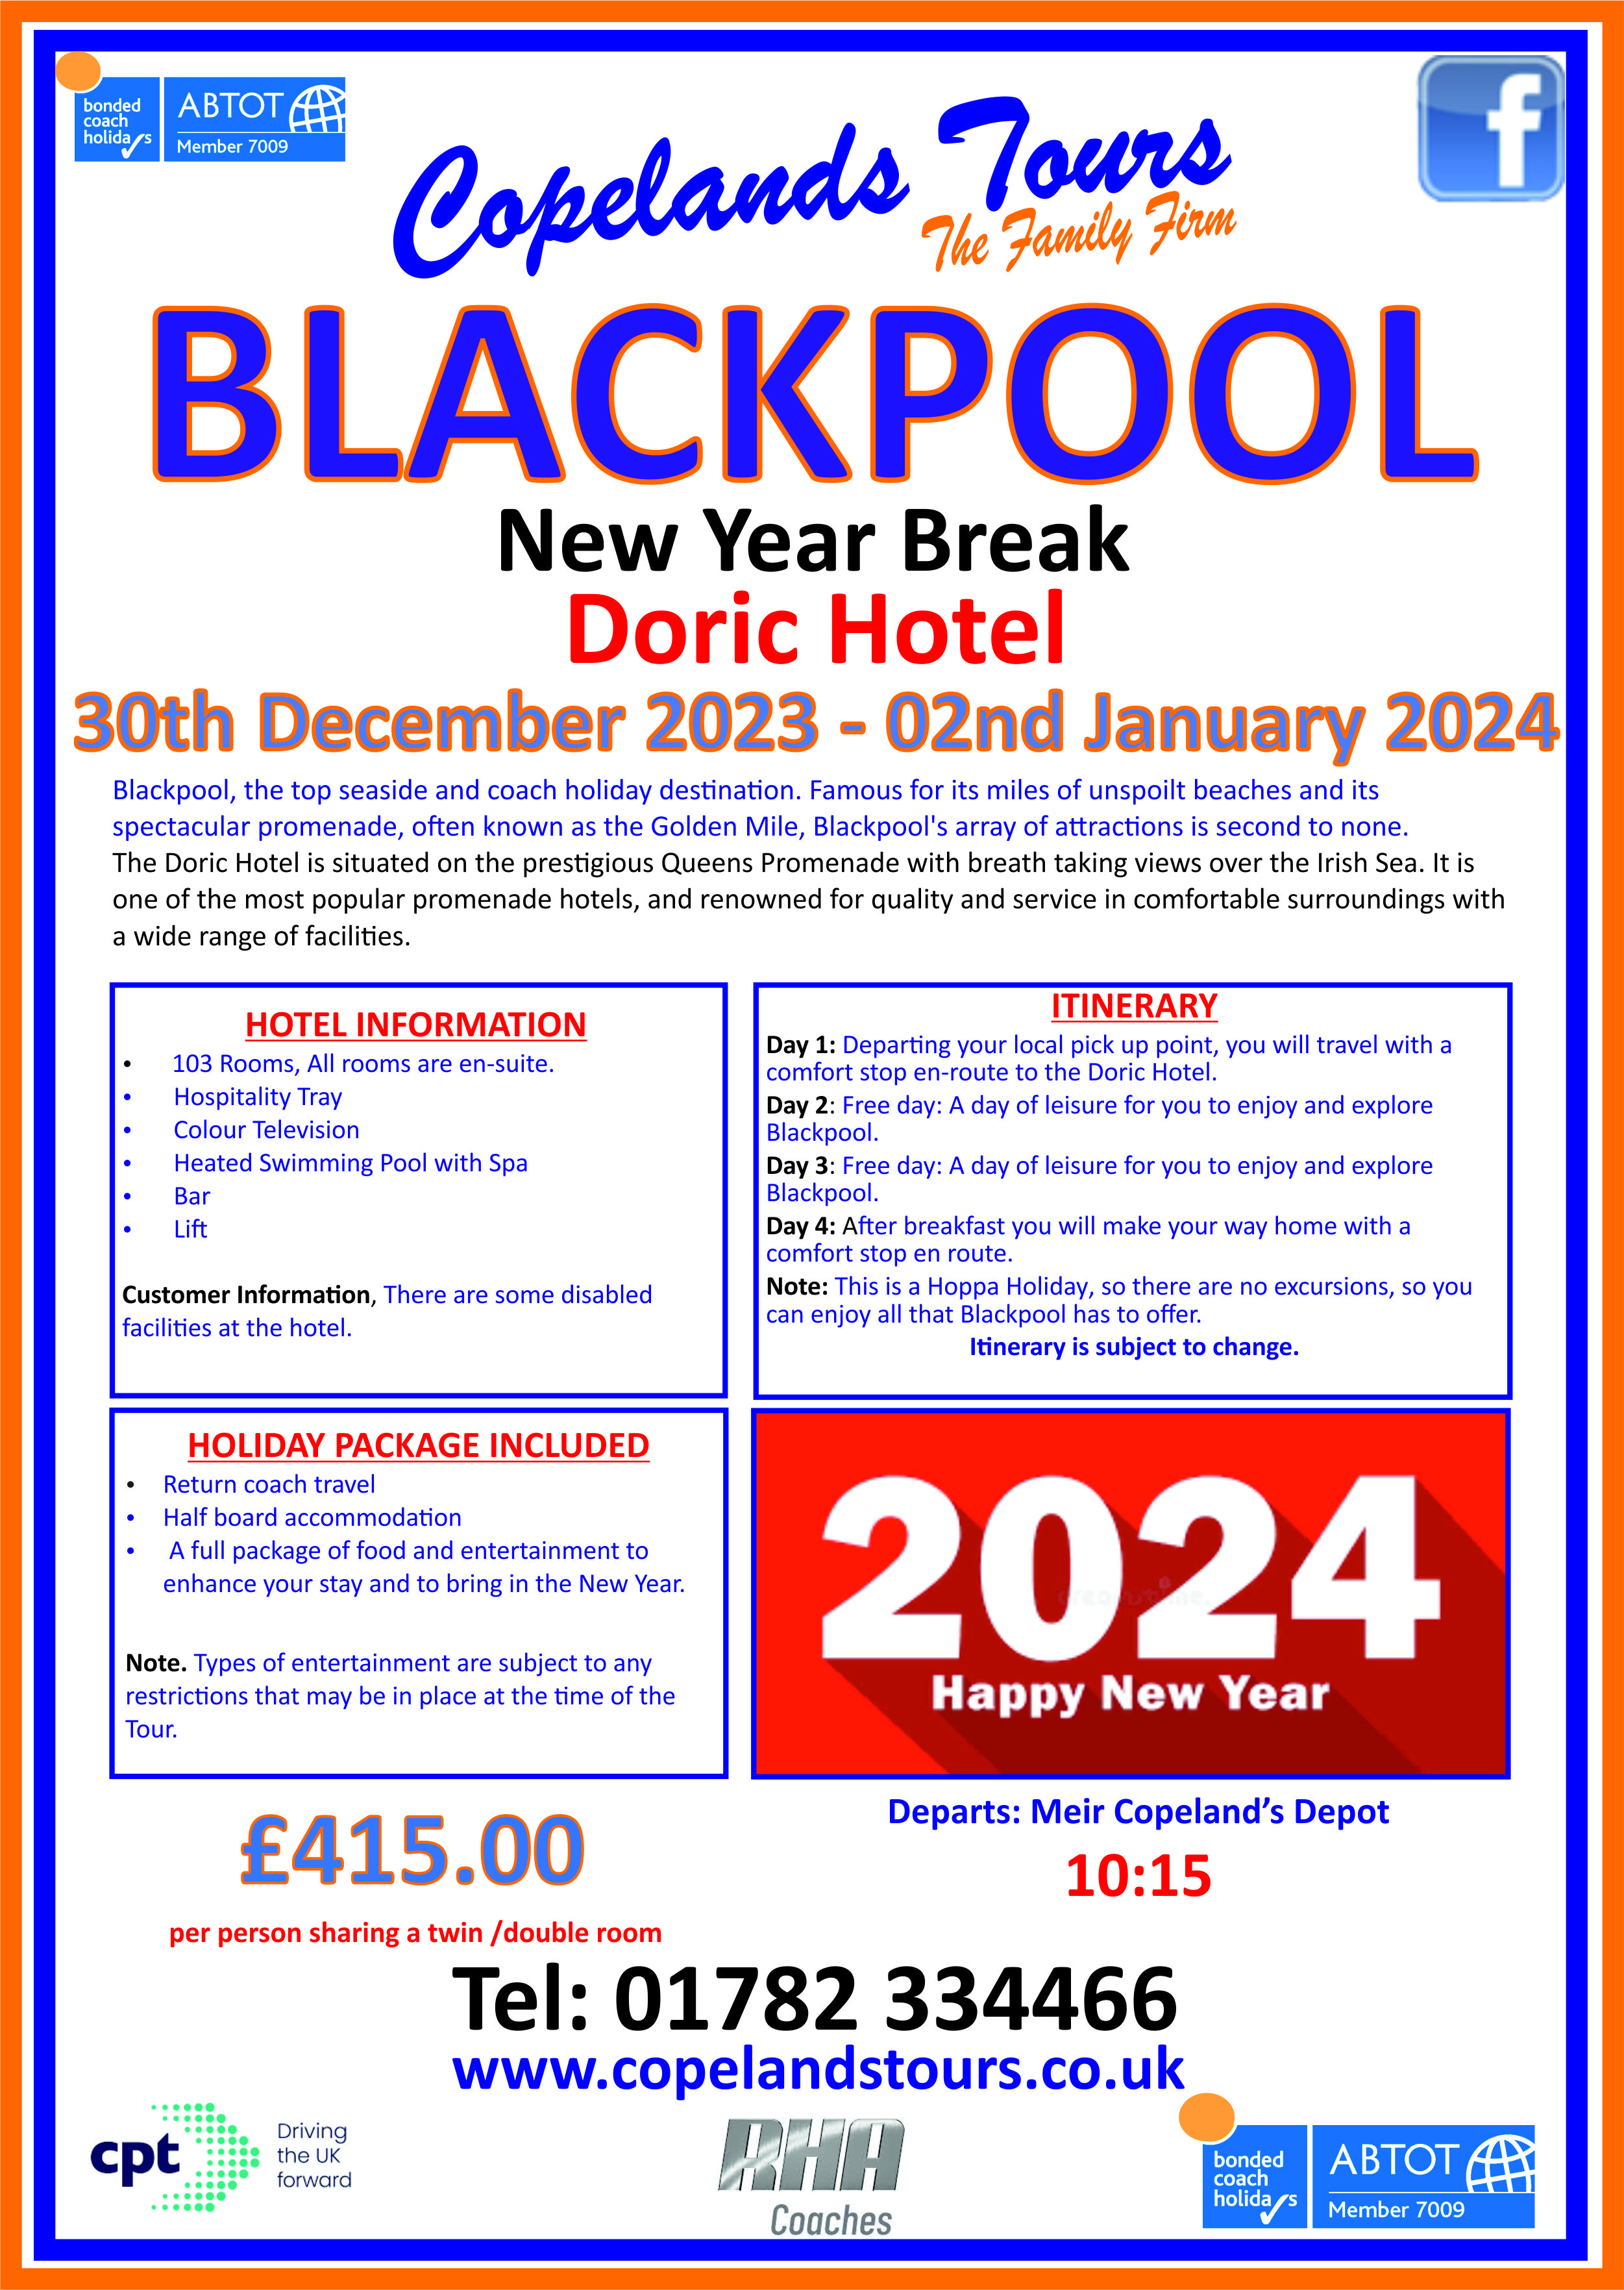 Blackpool - New Year